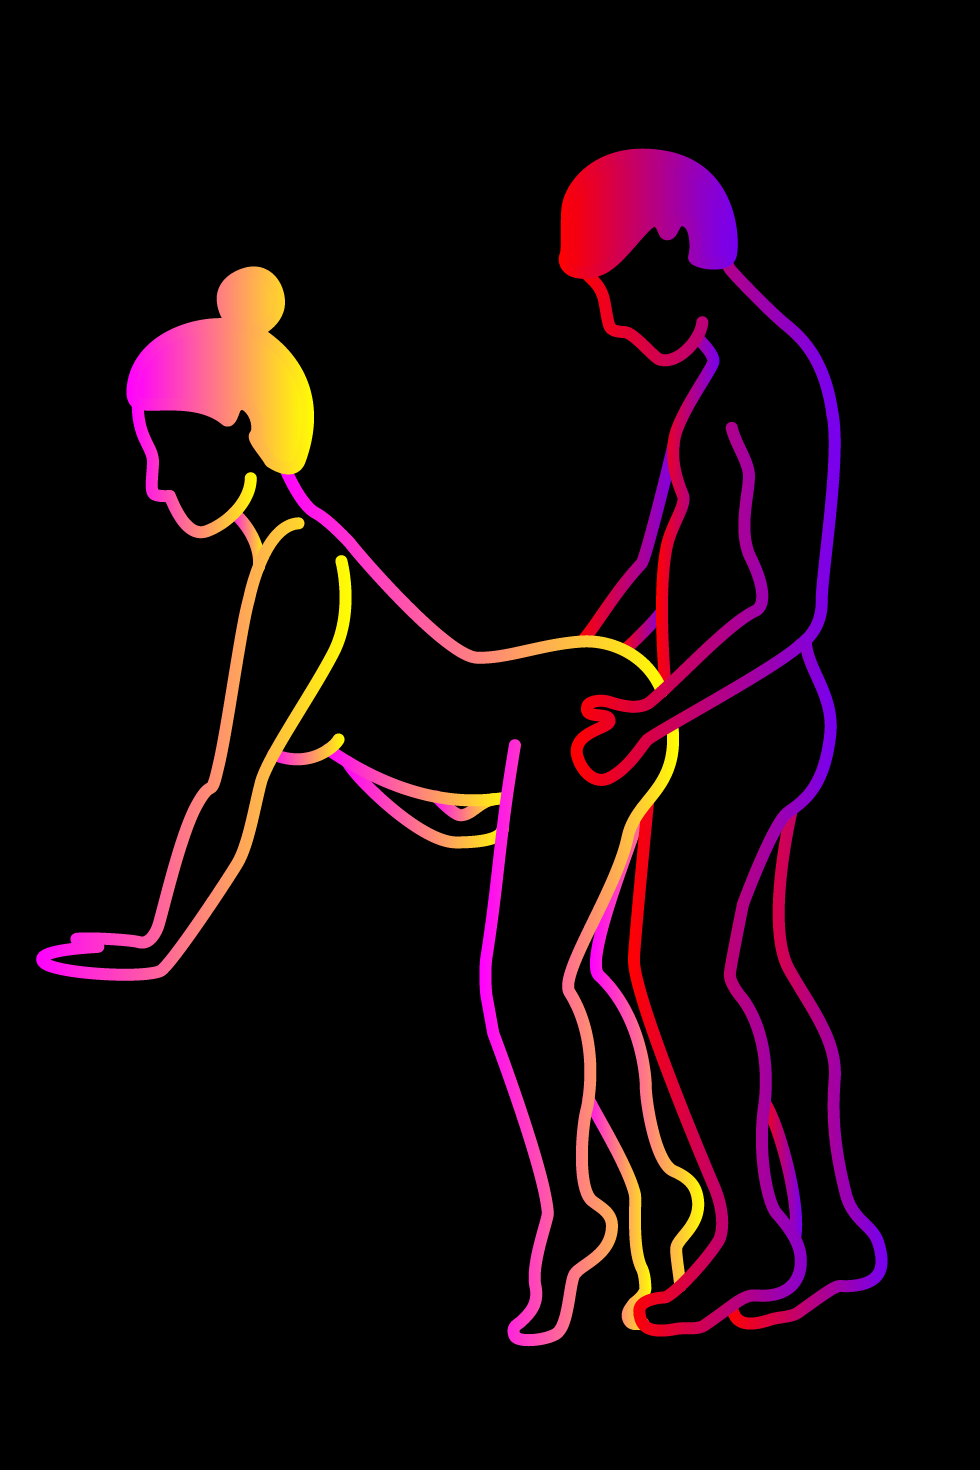 Human, Joint, Human body, Organism, Muscle, Silhouette, Line art, Human leg, Neon, Illustration, 